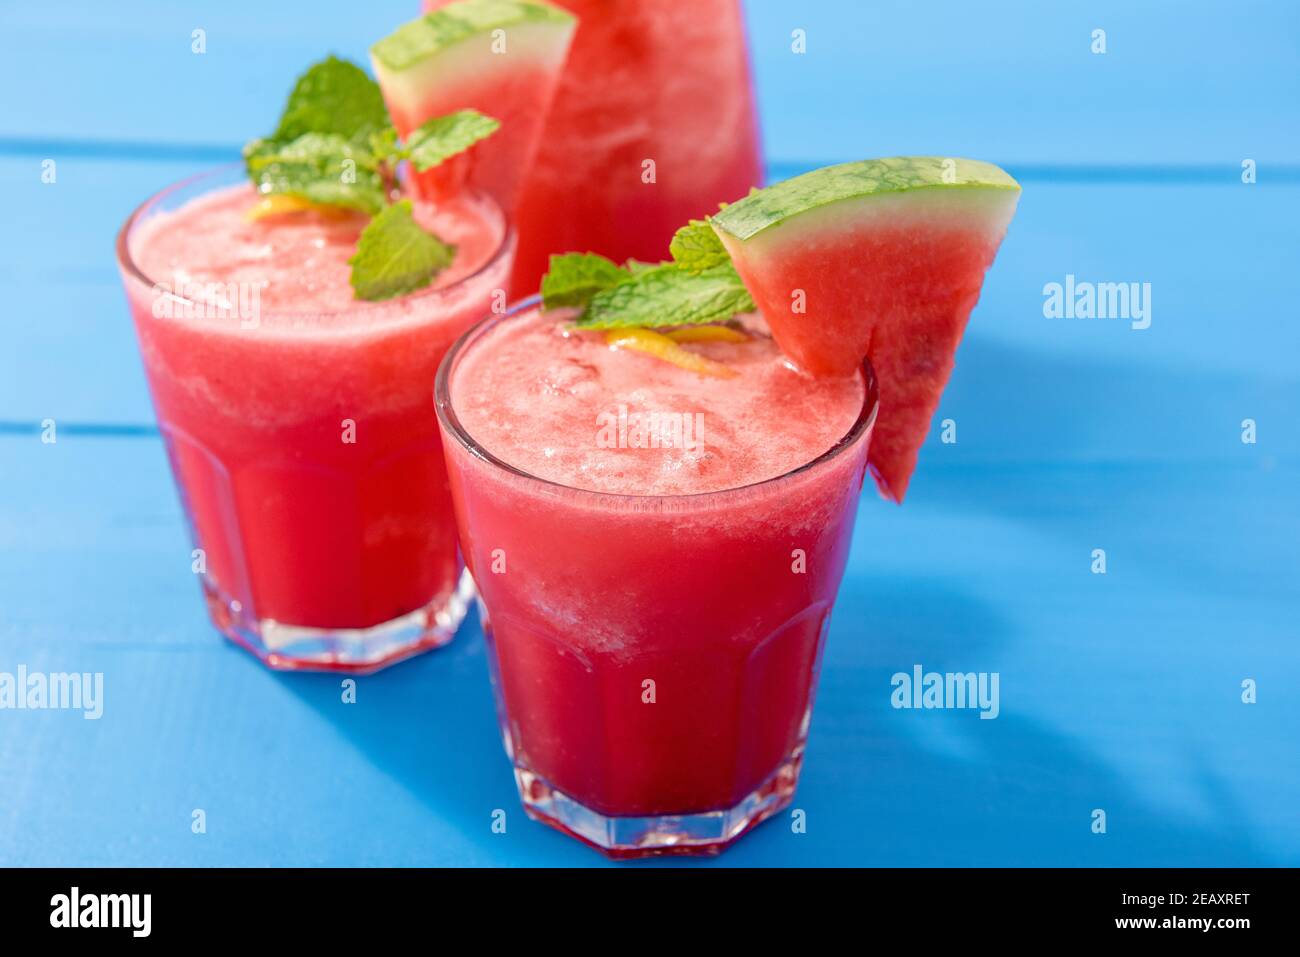 Succo di anguria bevande estive nei bicchieri con fette di foglie di frutta e menta usate per guarnire su tavola blu Foto Stock